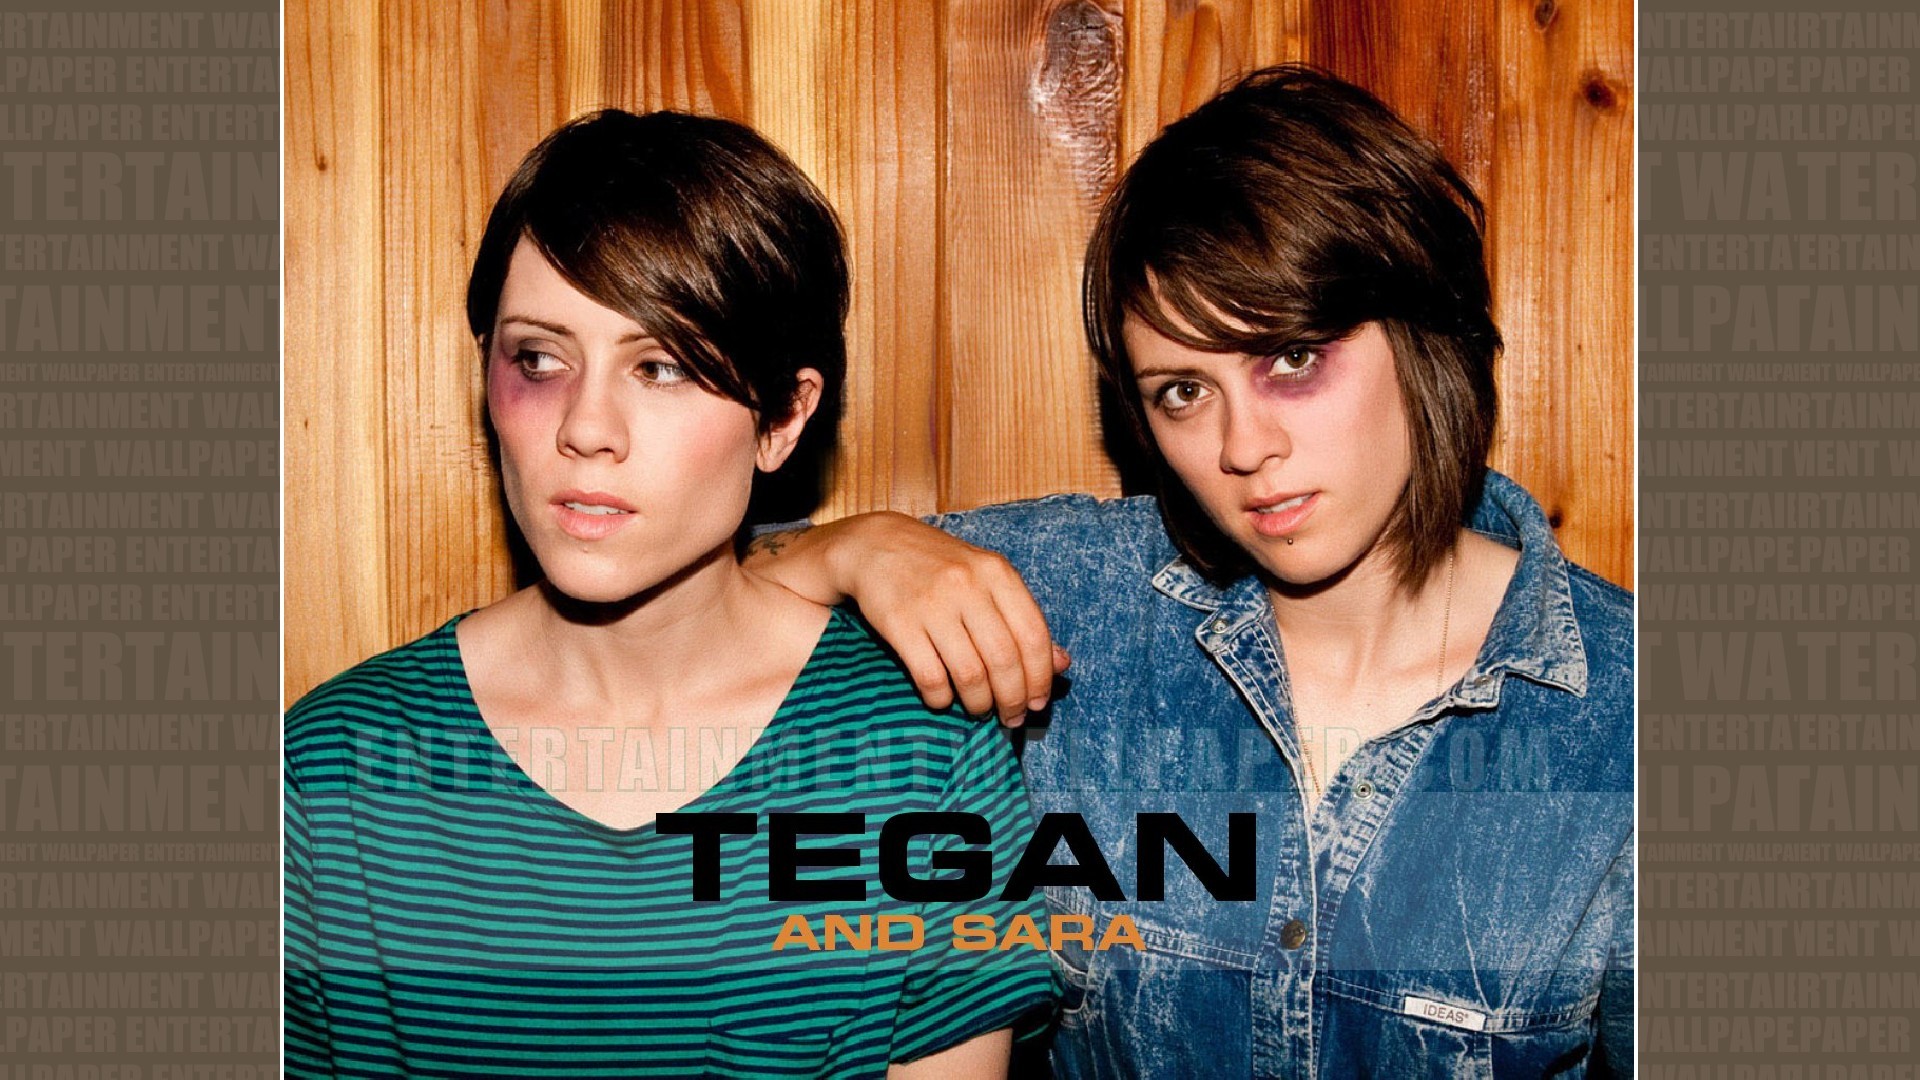 1920x1080 Tegan and Sara Wallpaper - Original size, download now.